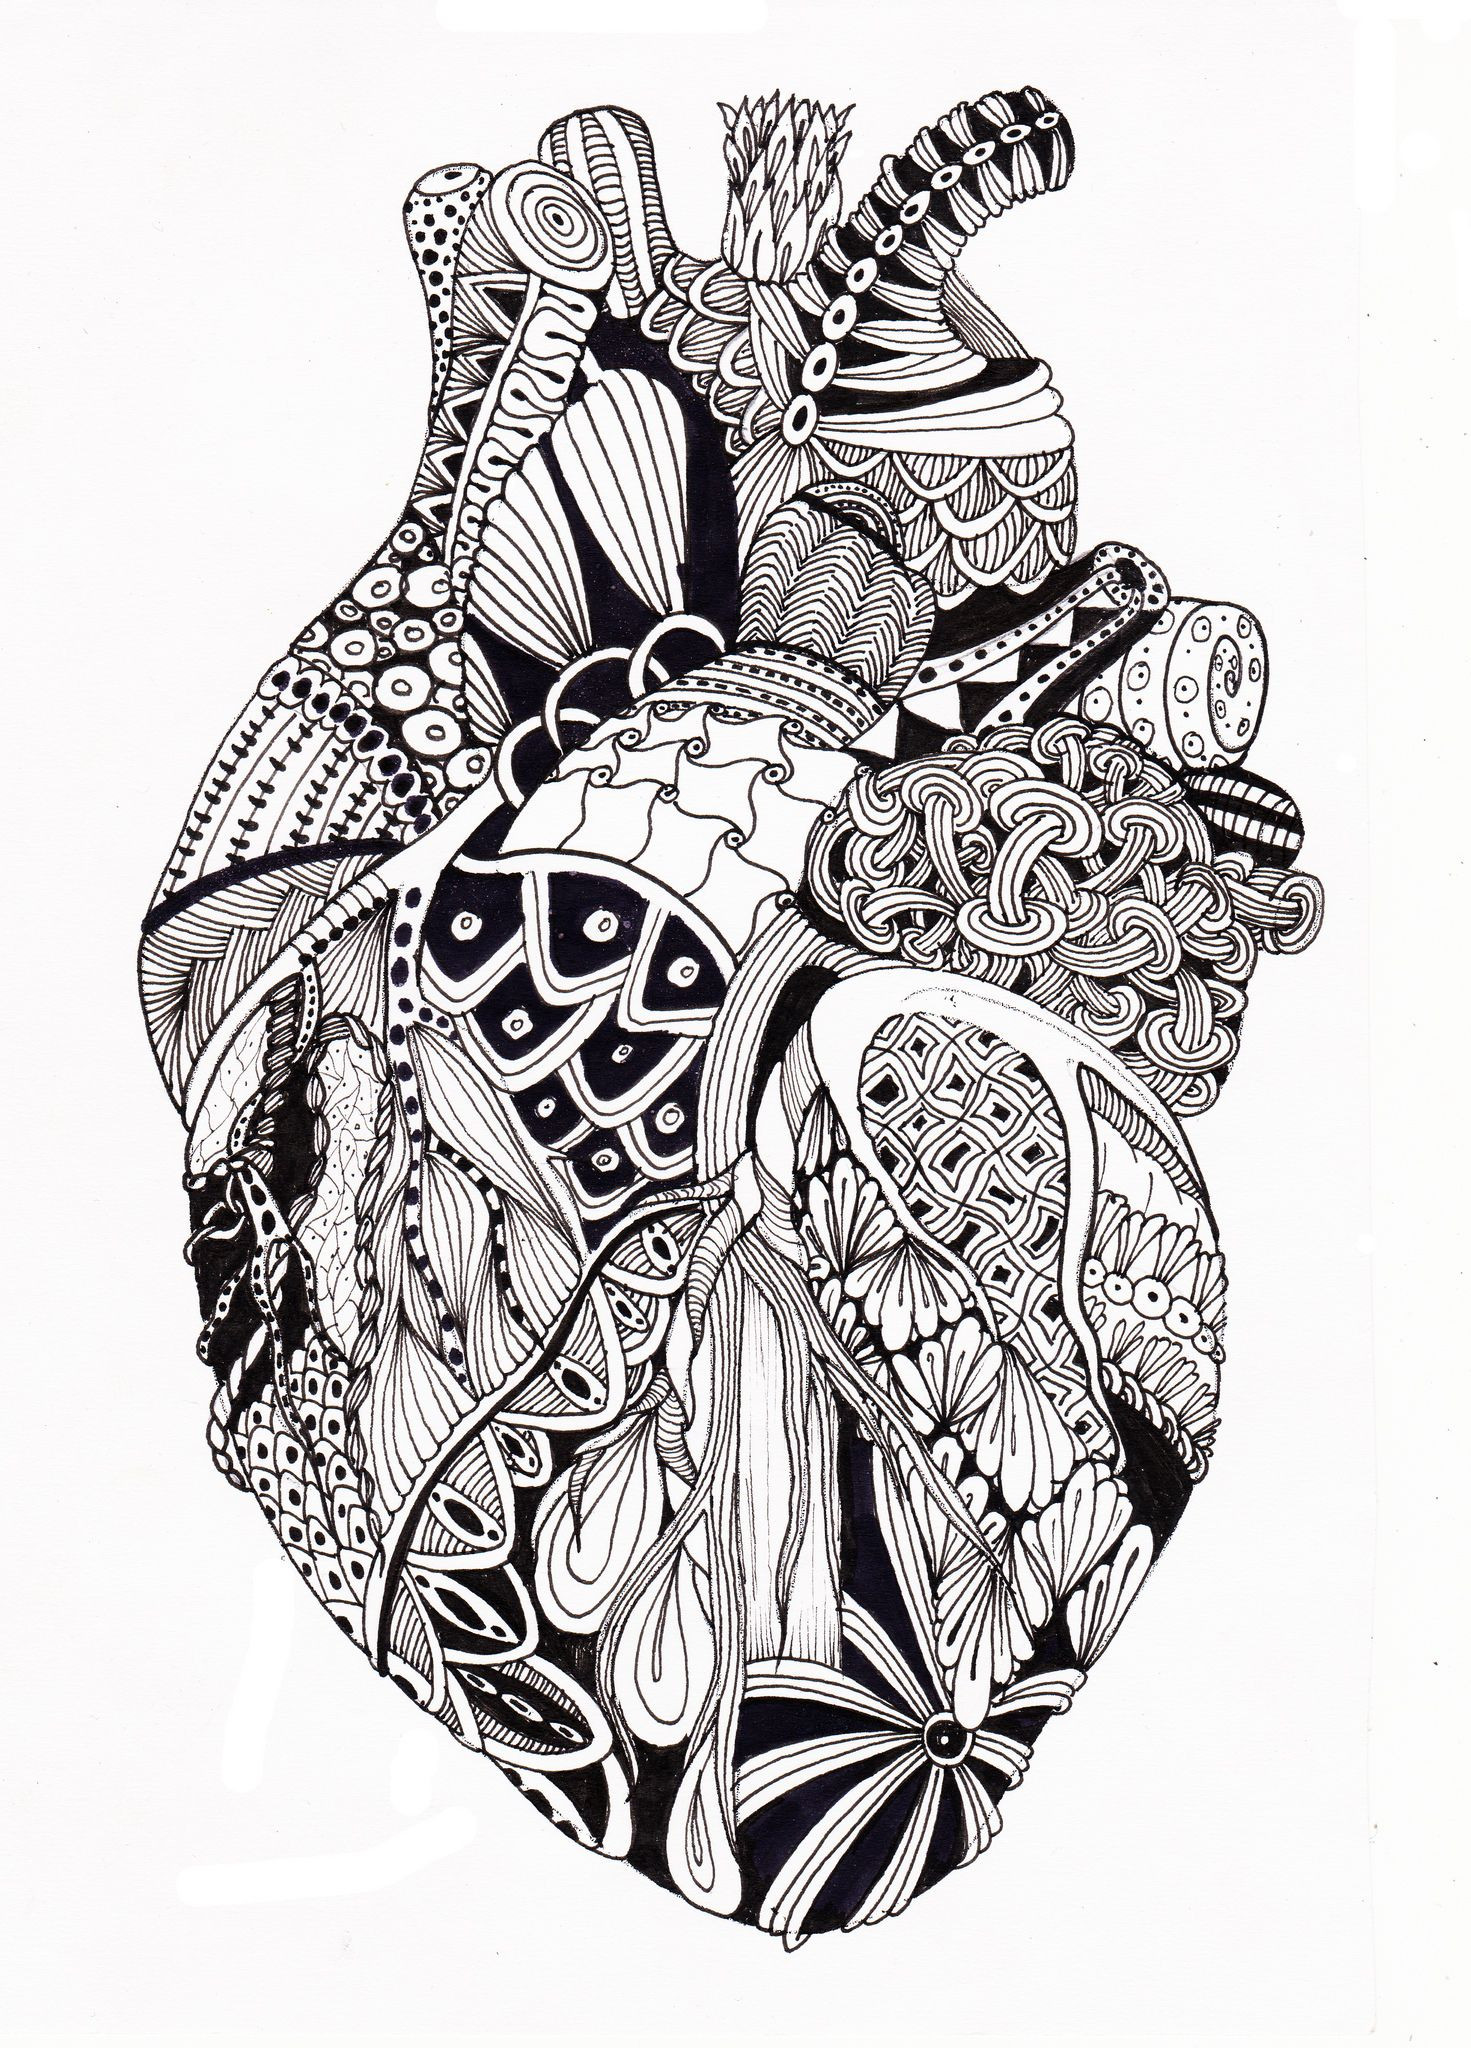 anatomical heart flower vase of zen heart1 love is love pinterest art zen and heart art pertaining to 298df3963fe854253706028c0a34b286